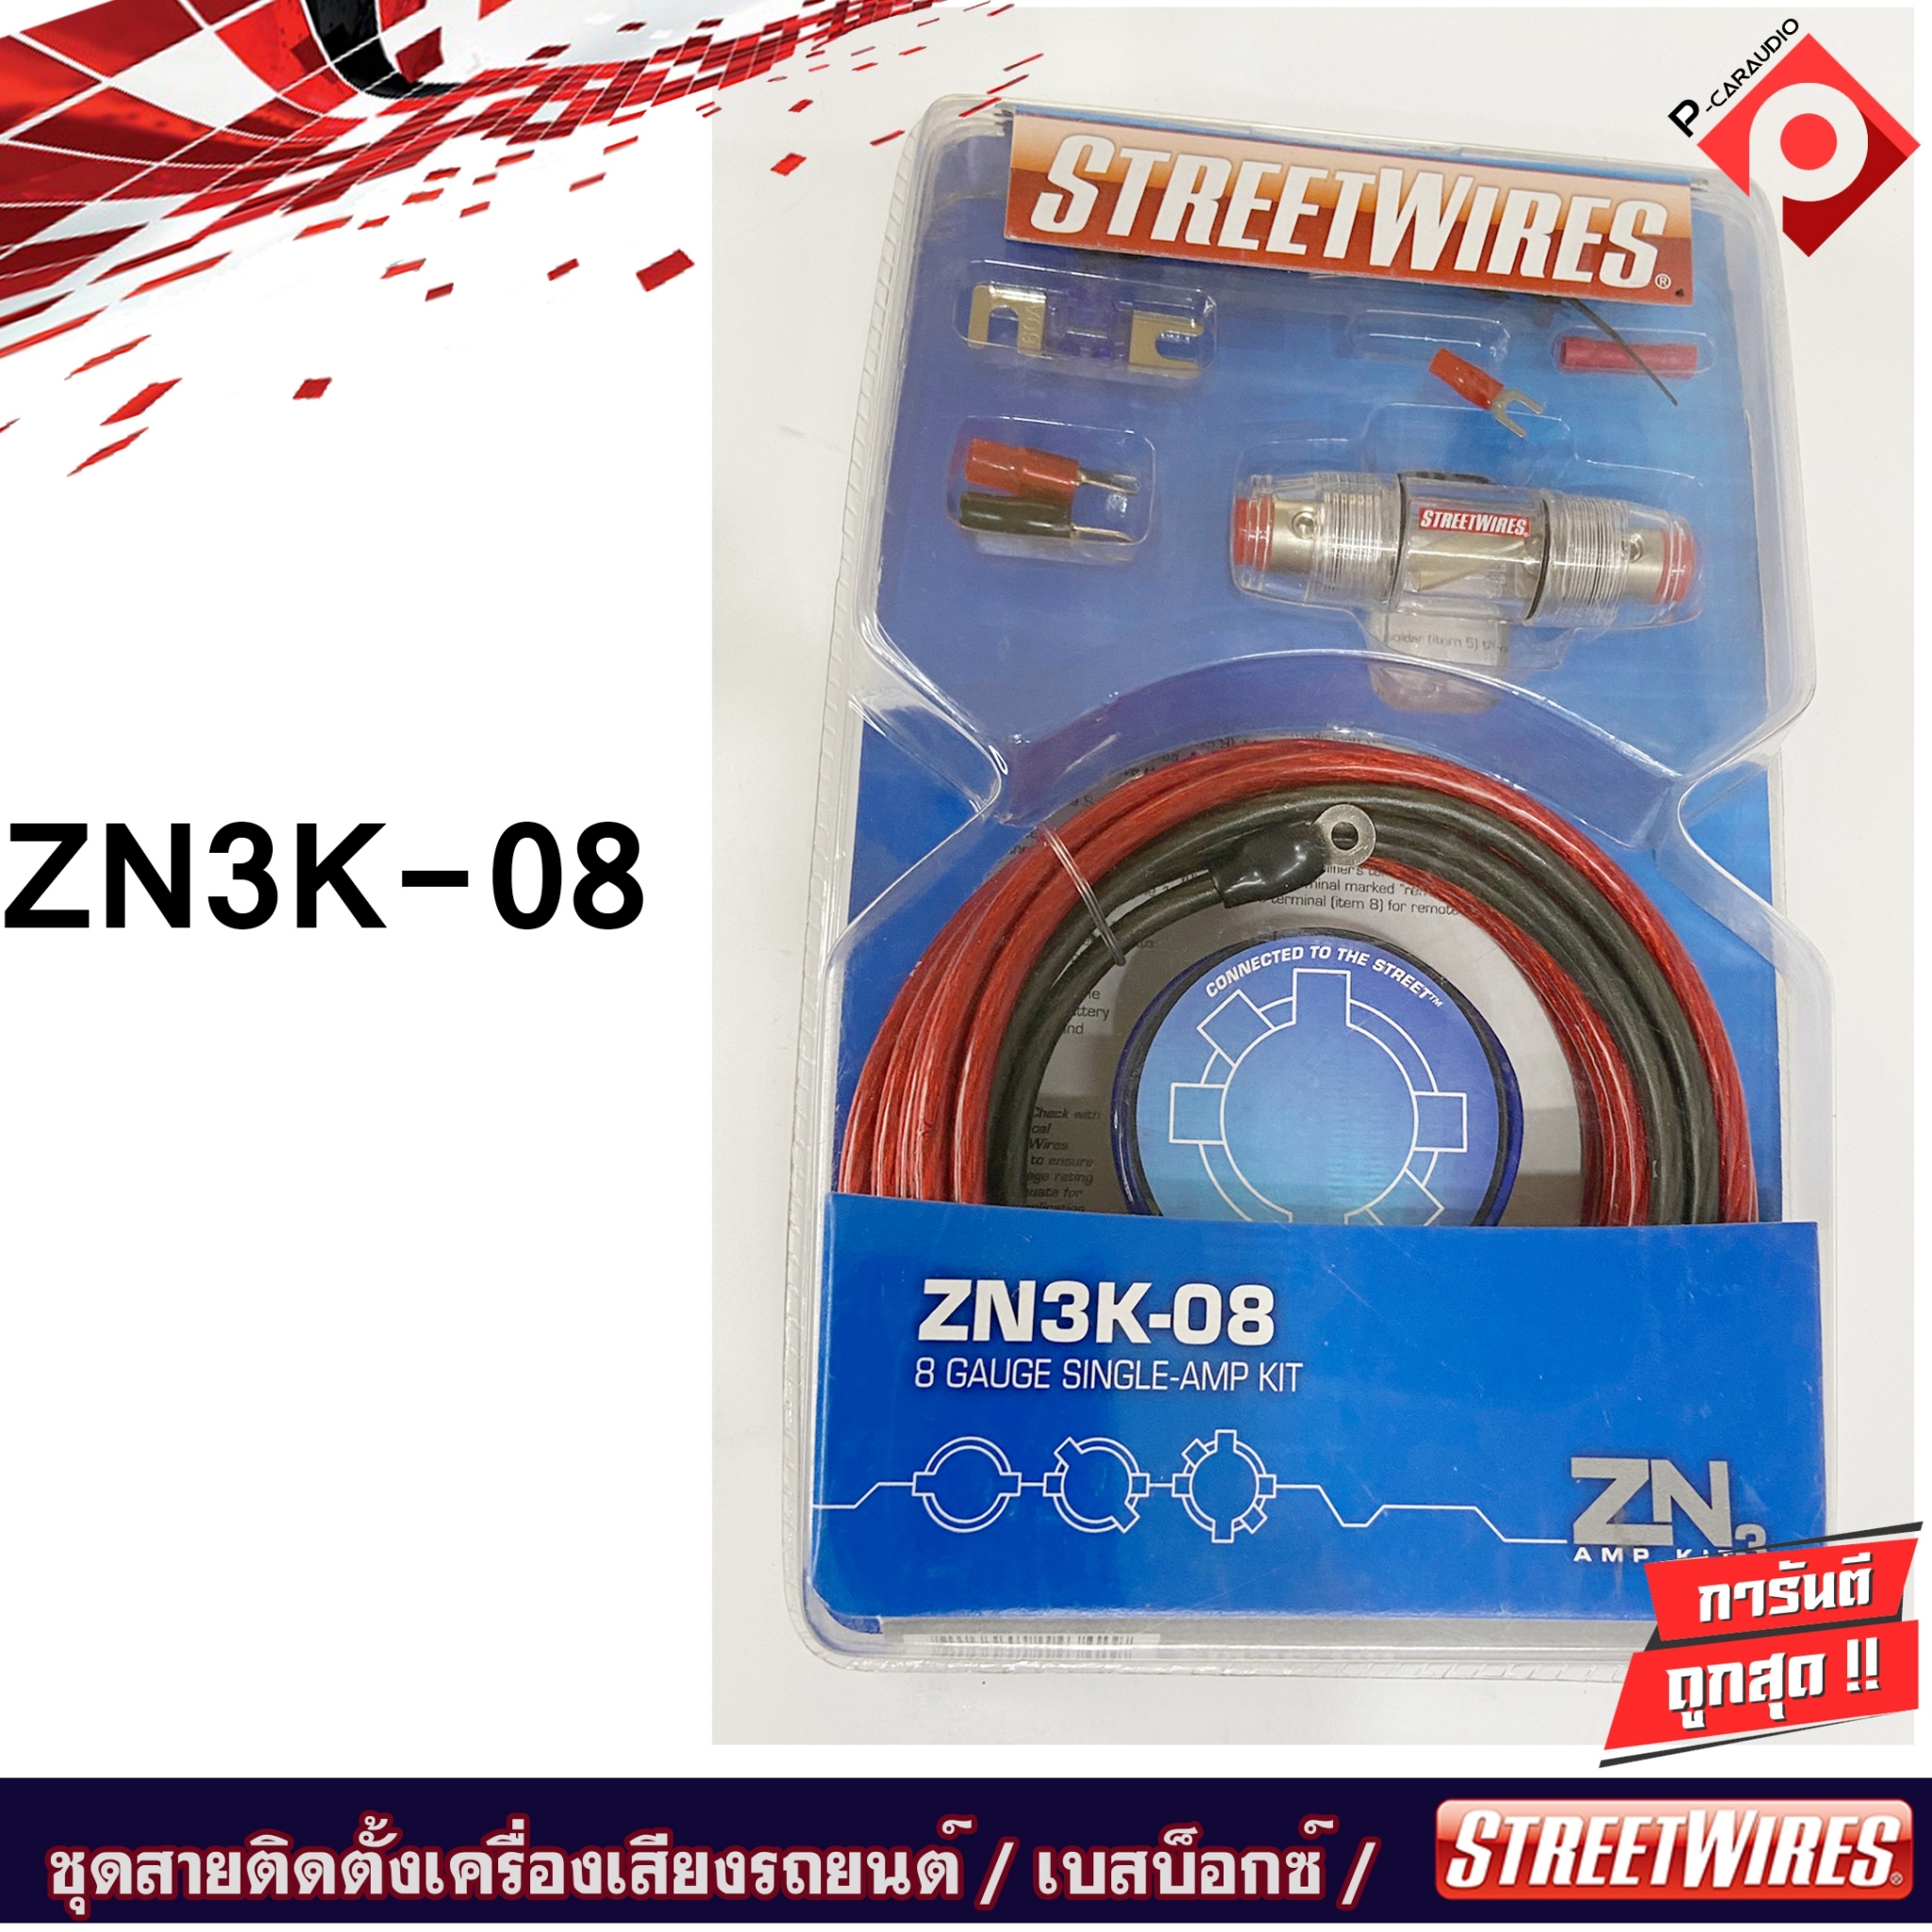 StreetWires ZN3K-08 ZN3 Series Amp Kit ชุดติดตั้งเพาเวอร์แอมป์ เบสบ็อกซ์ เครื่องเสียงรถยนต์ครบเซ็ต